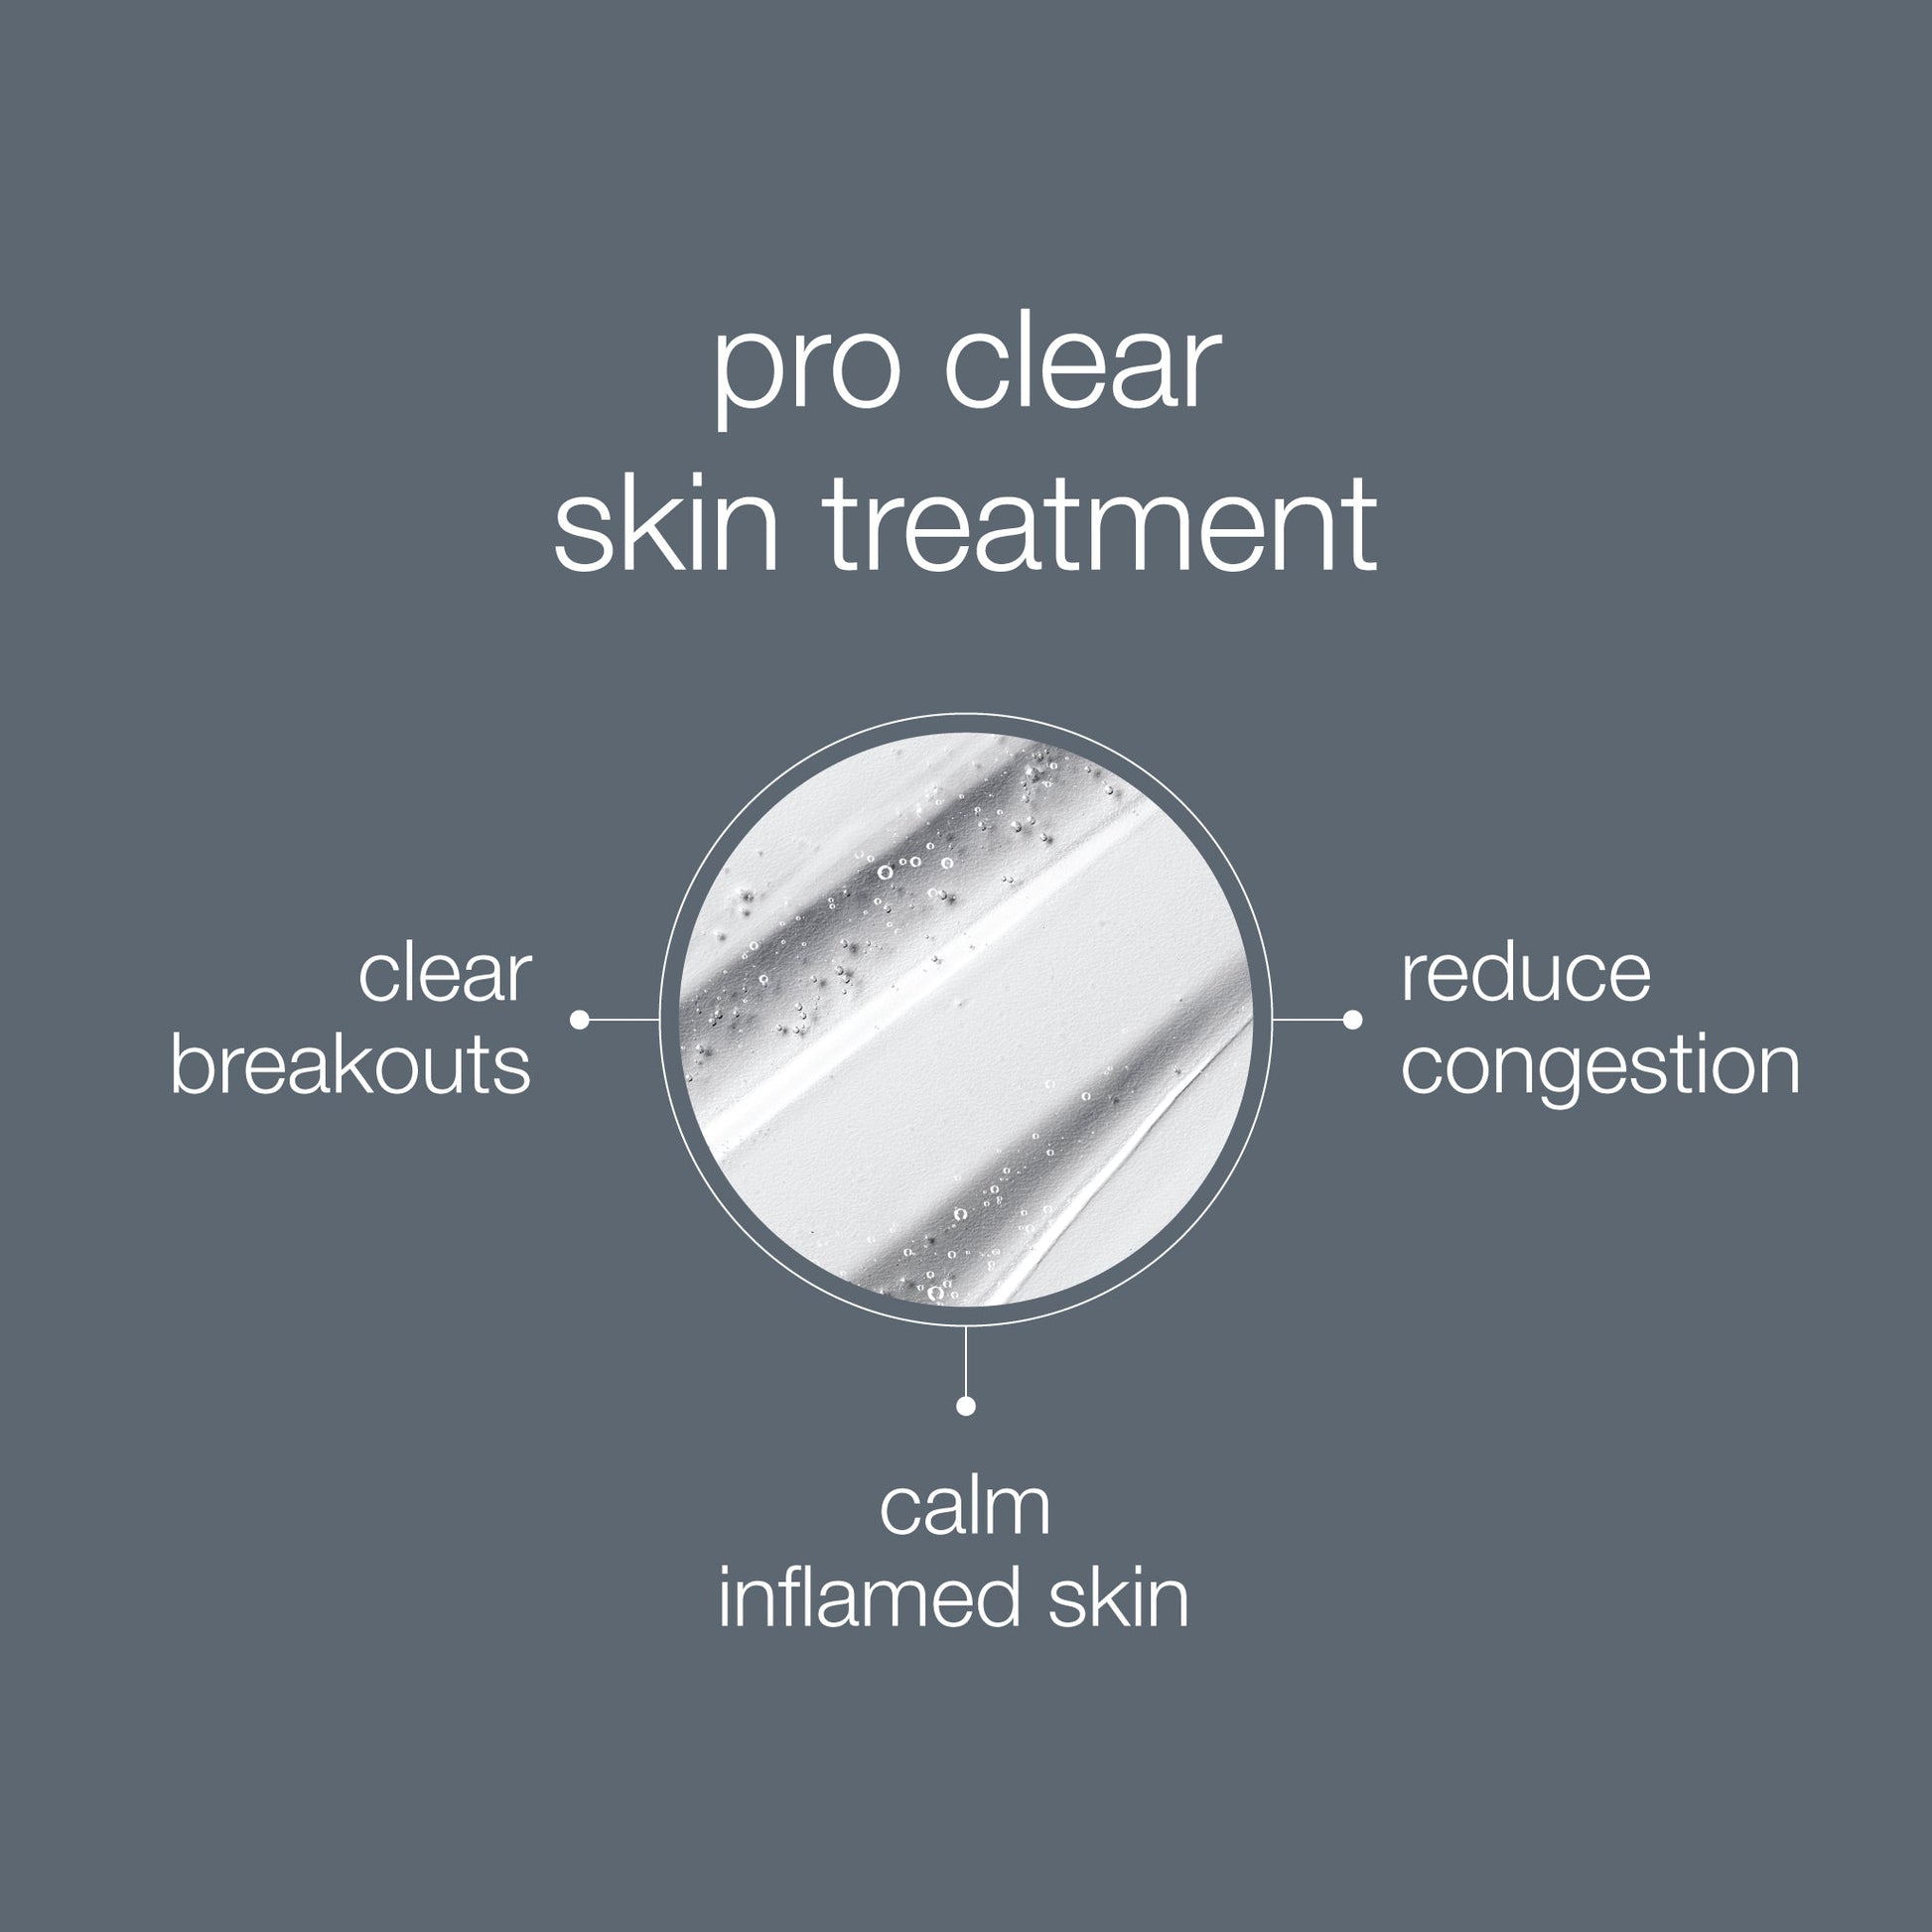 pro clear skin treatment benefits